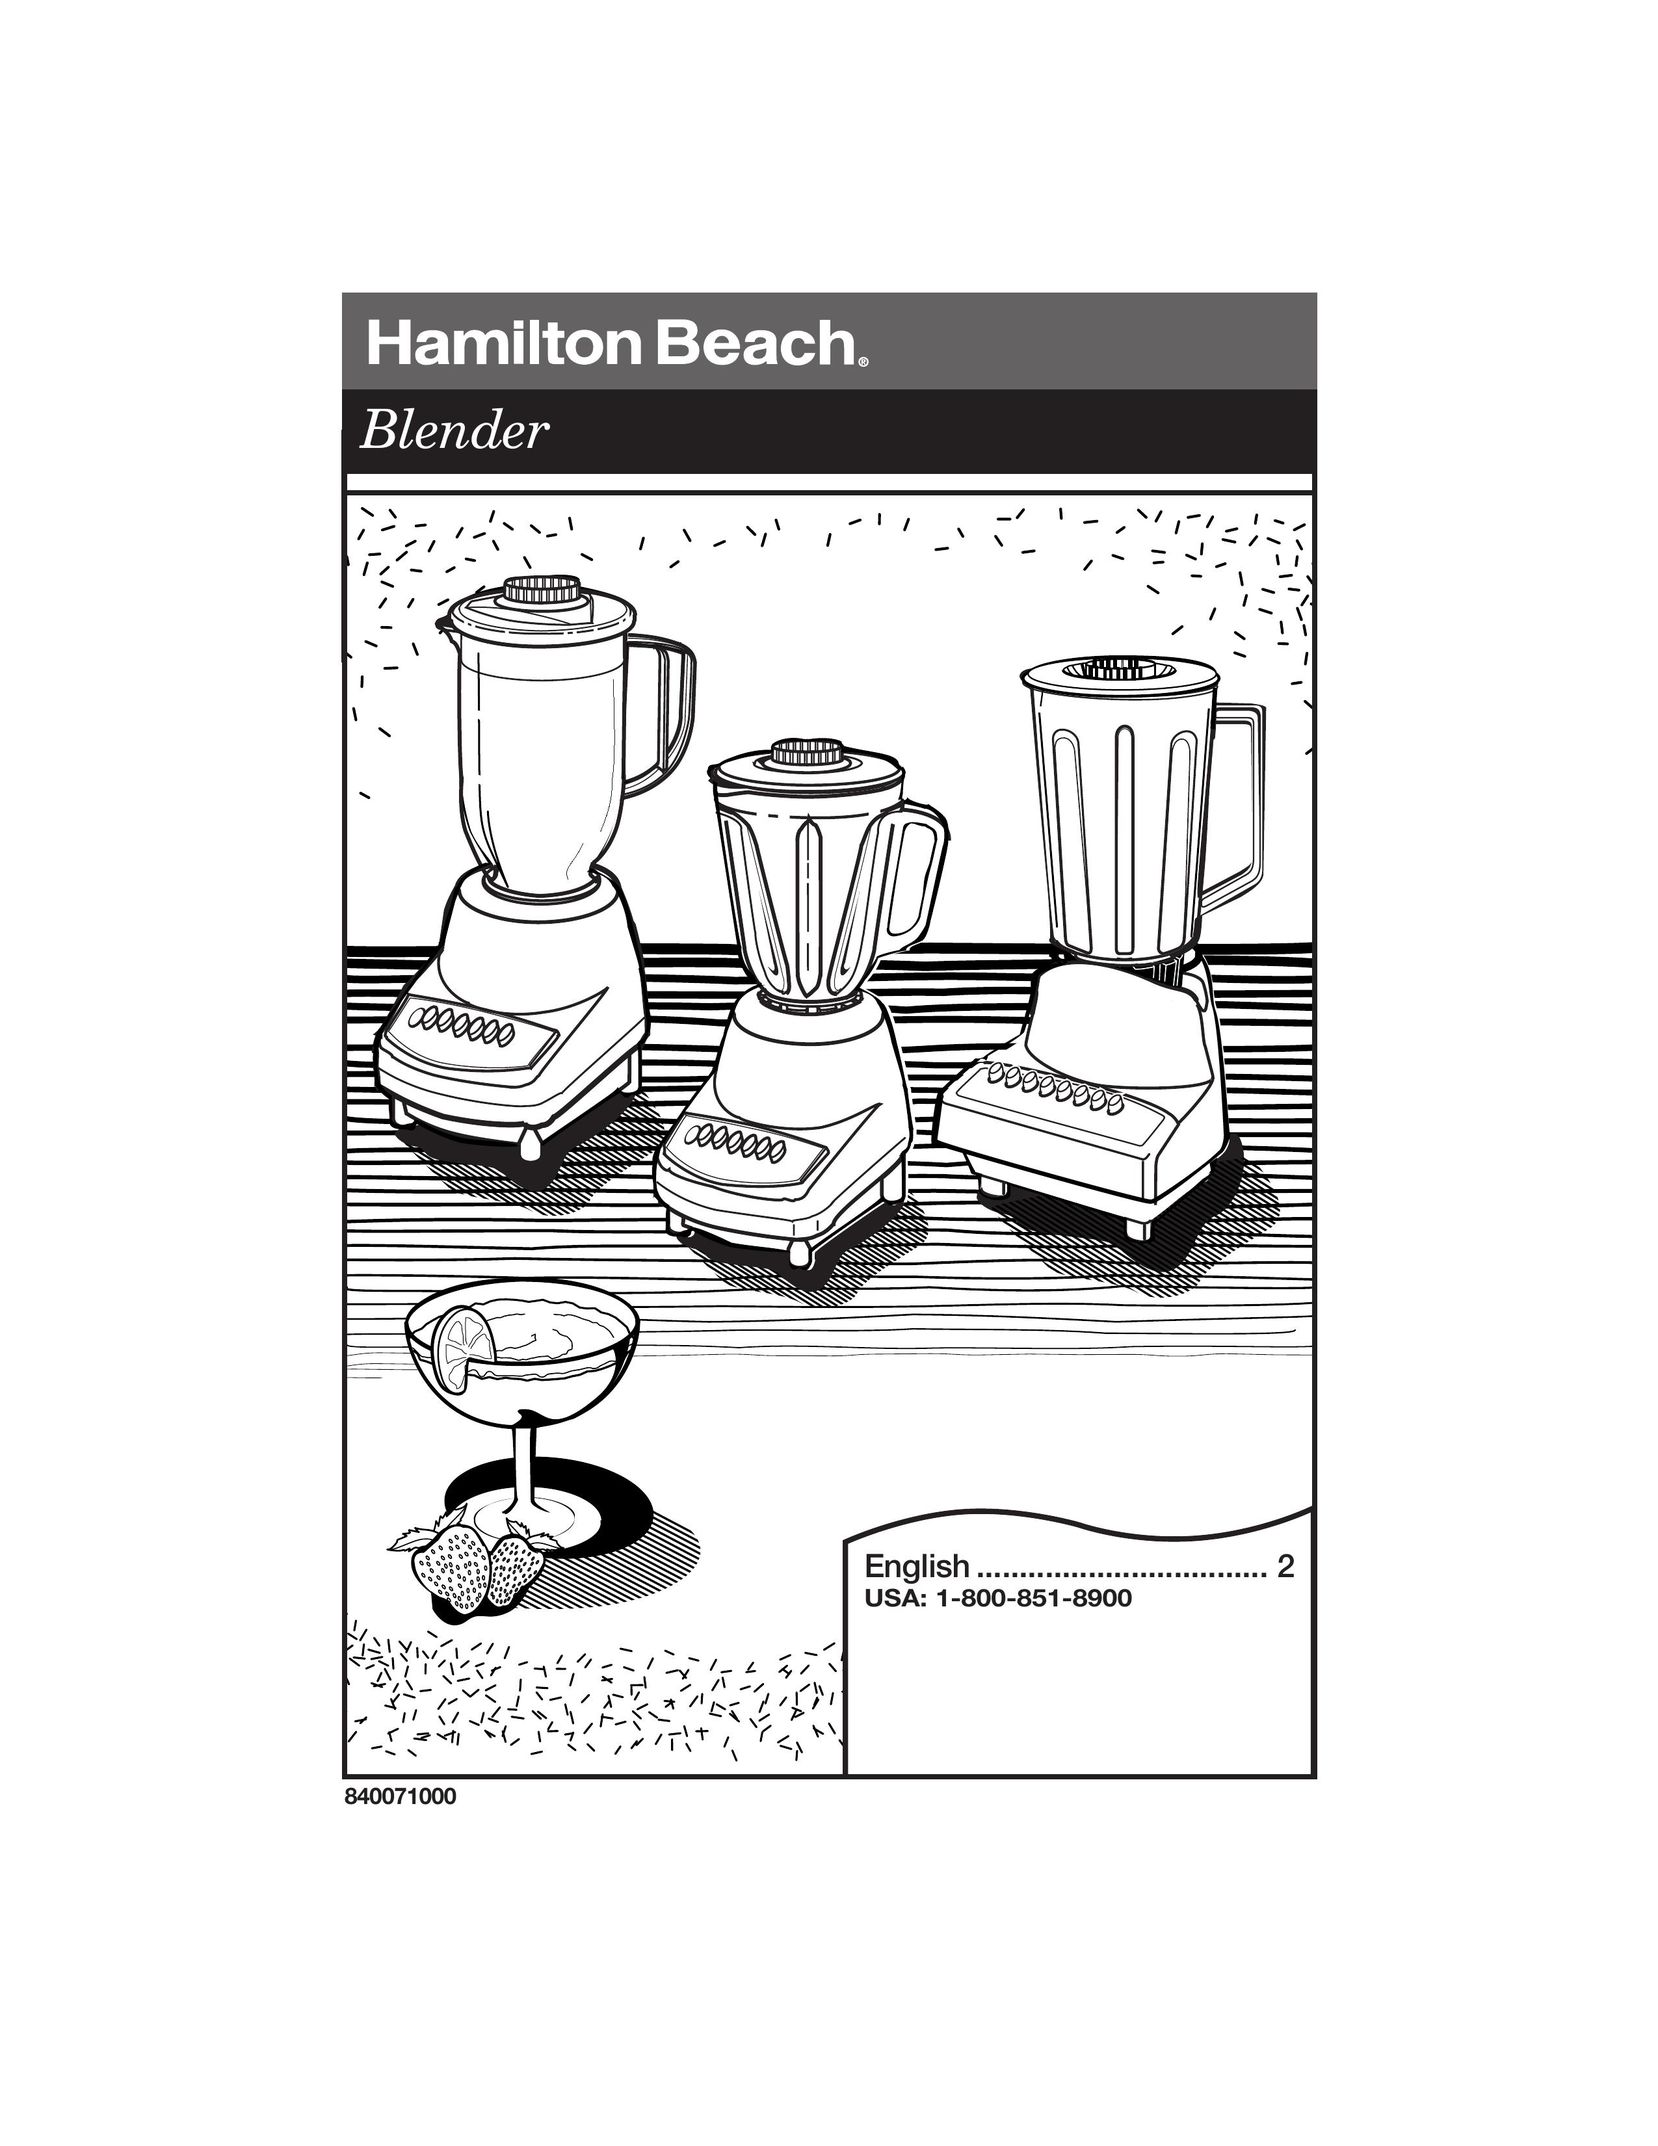 Hamilton Beach 840071000 Blender User Manual